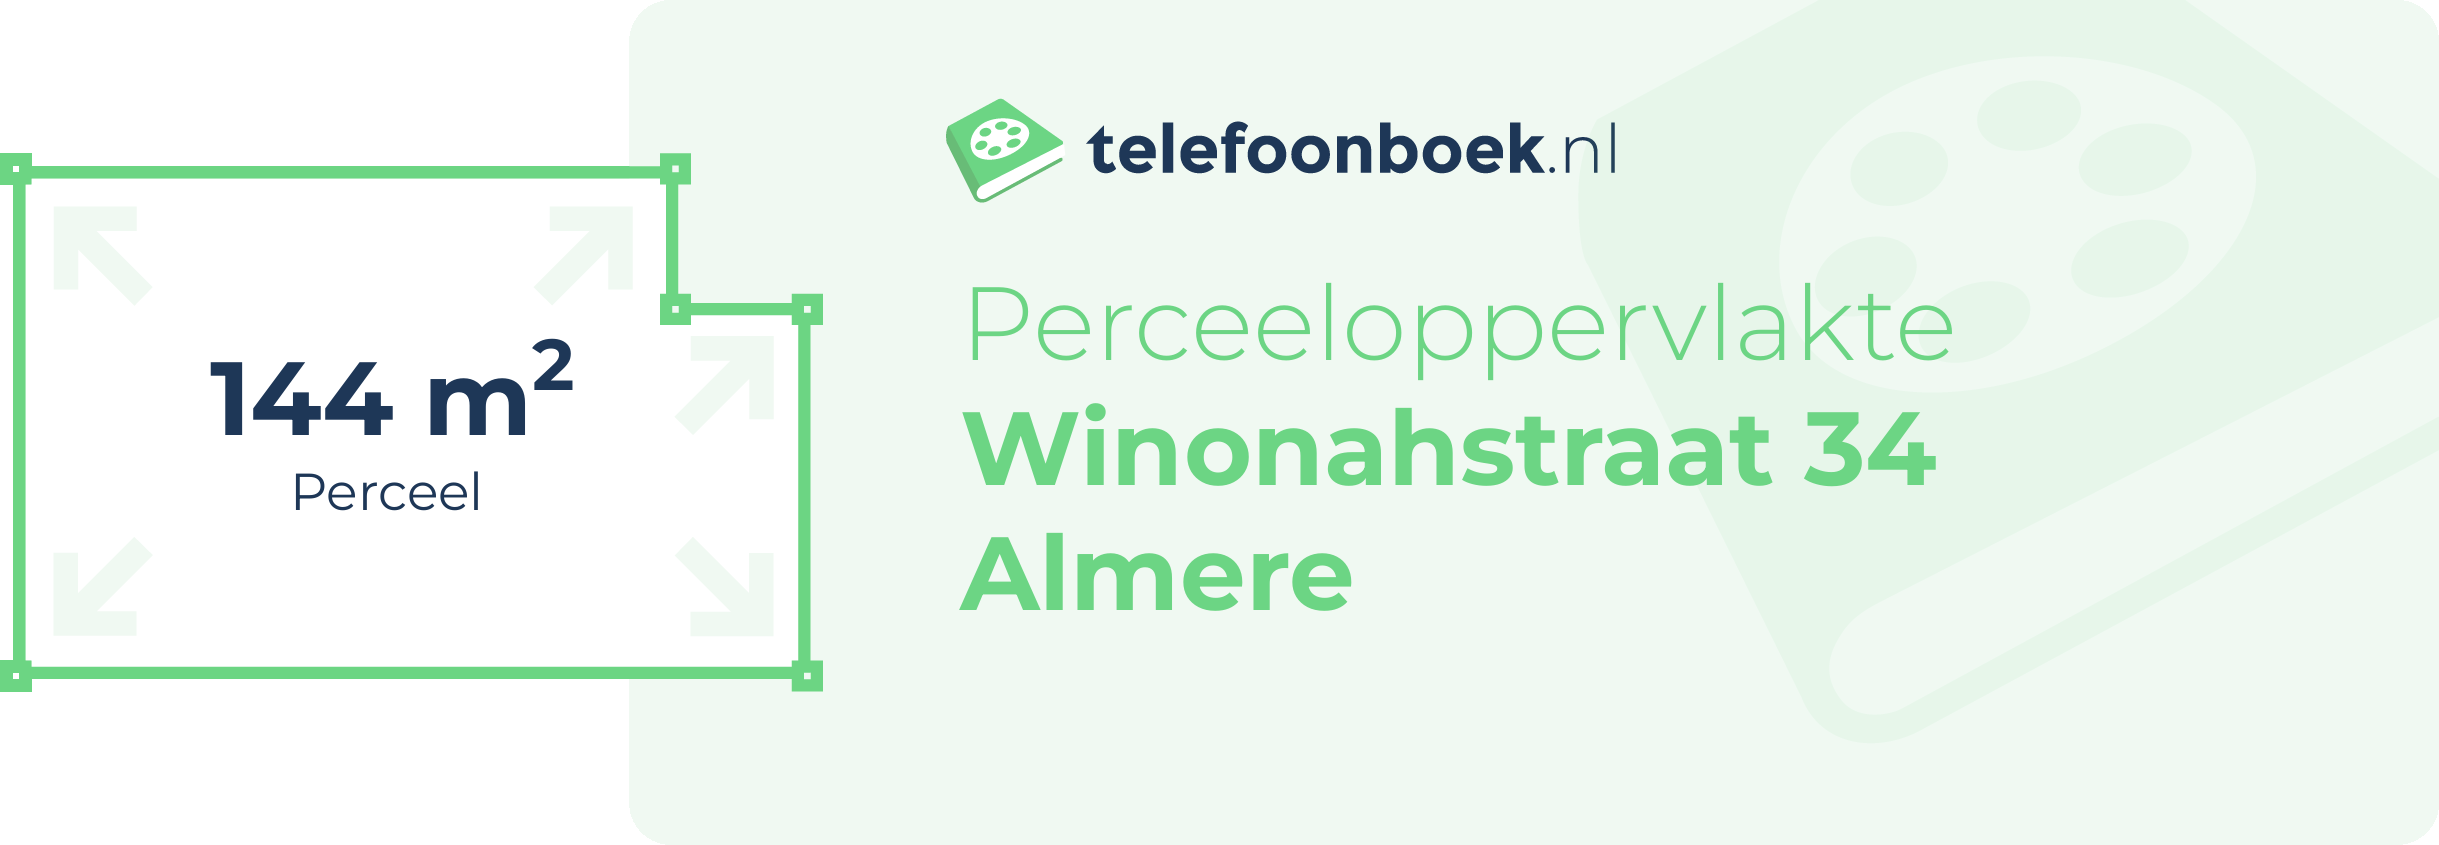 Perceeloppervlakte Winonahstraat 34 Almere